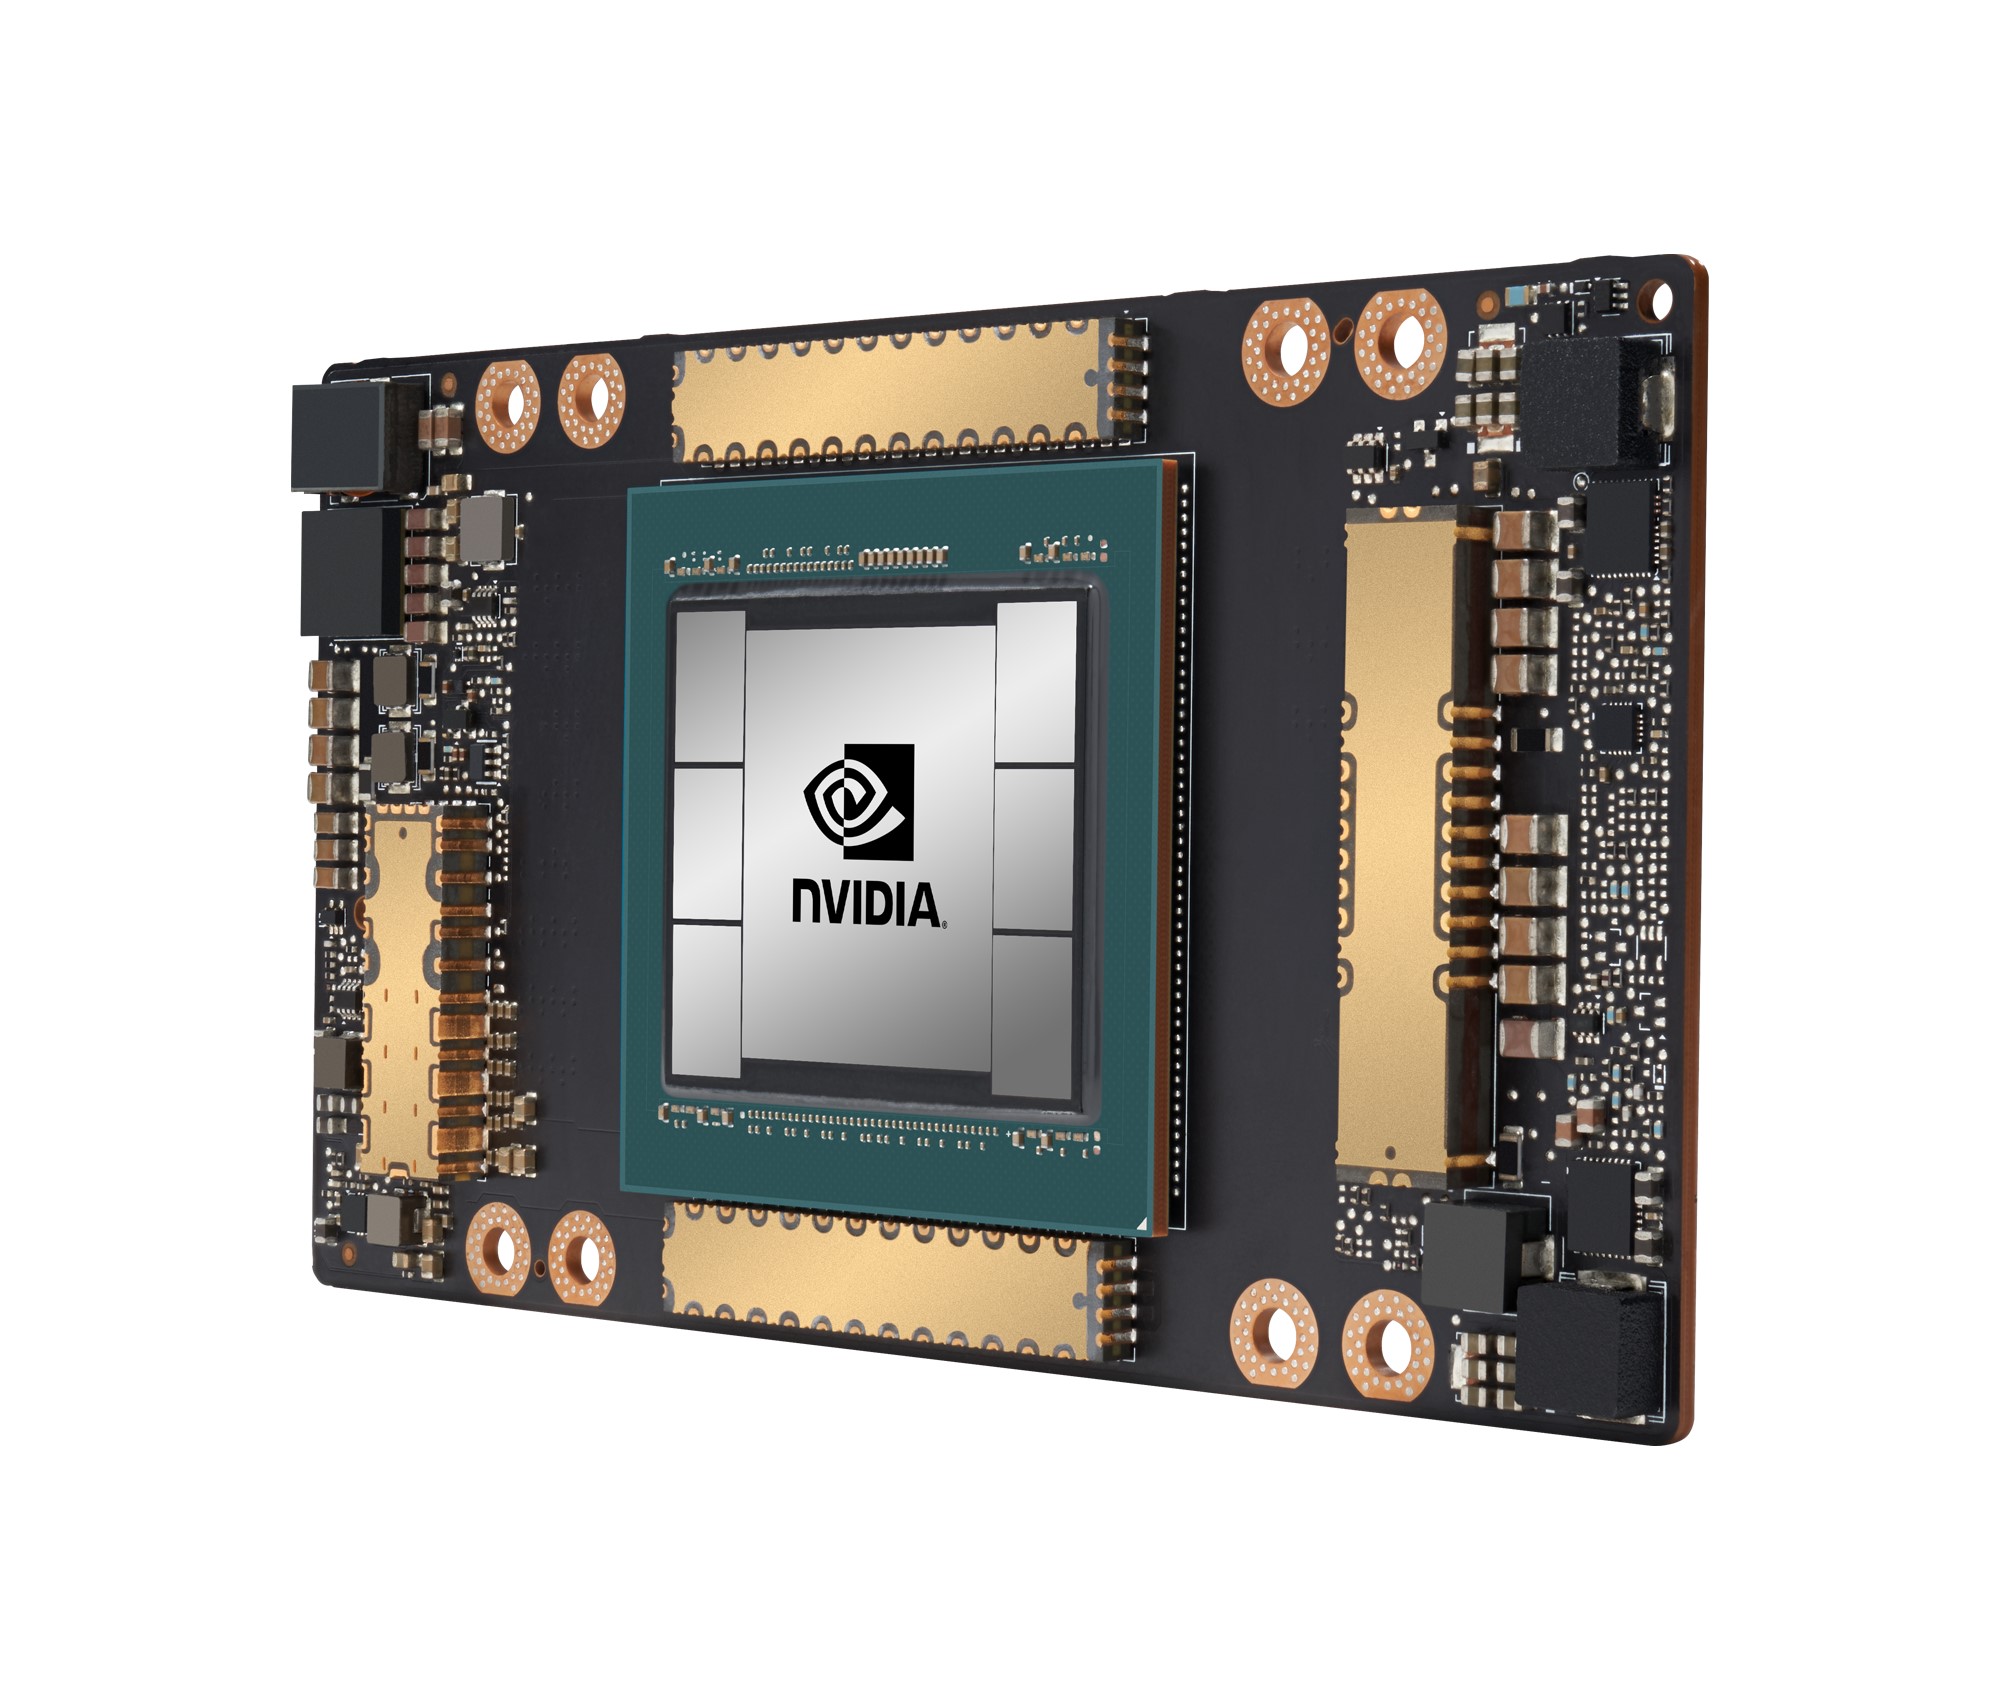 Nvidiaの新しい Ampere データセンター Gpu の生産が本格化 Nvidiaのプレスリリース